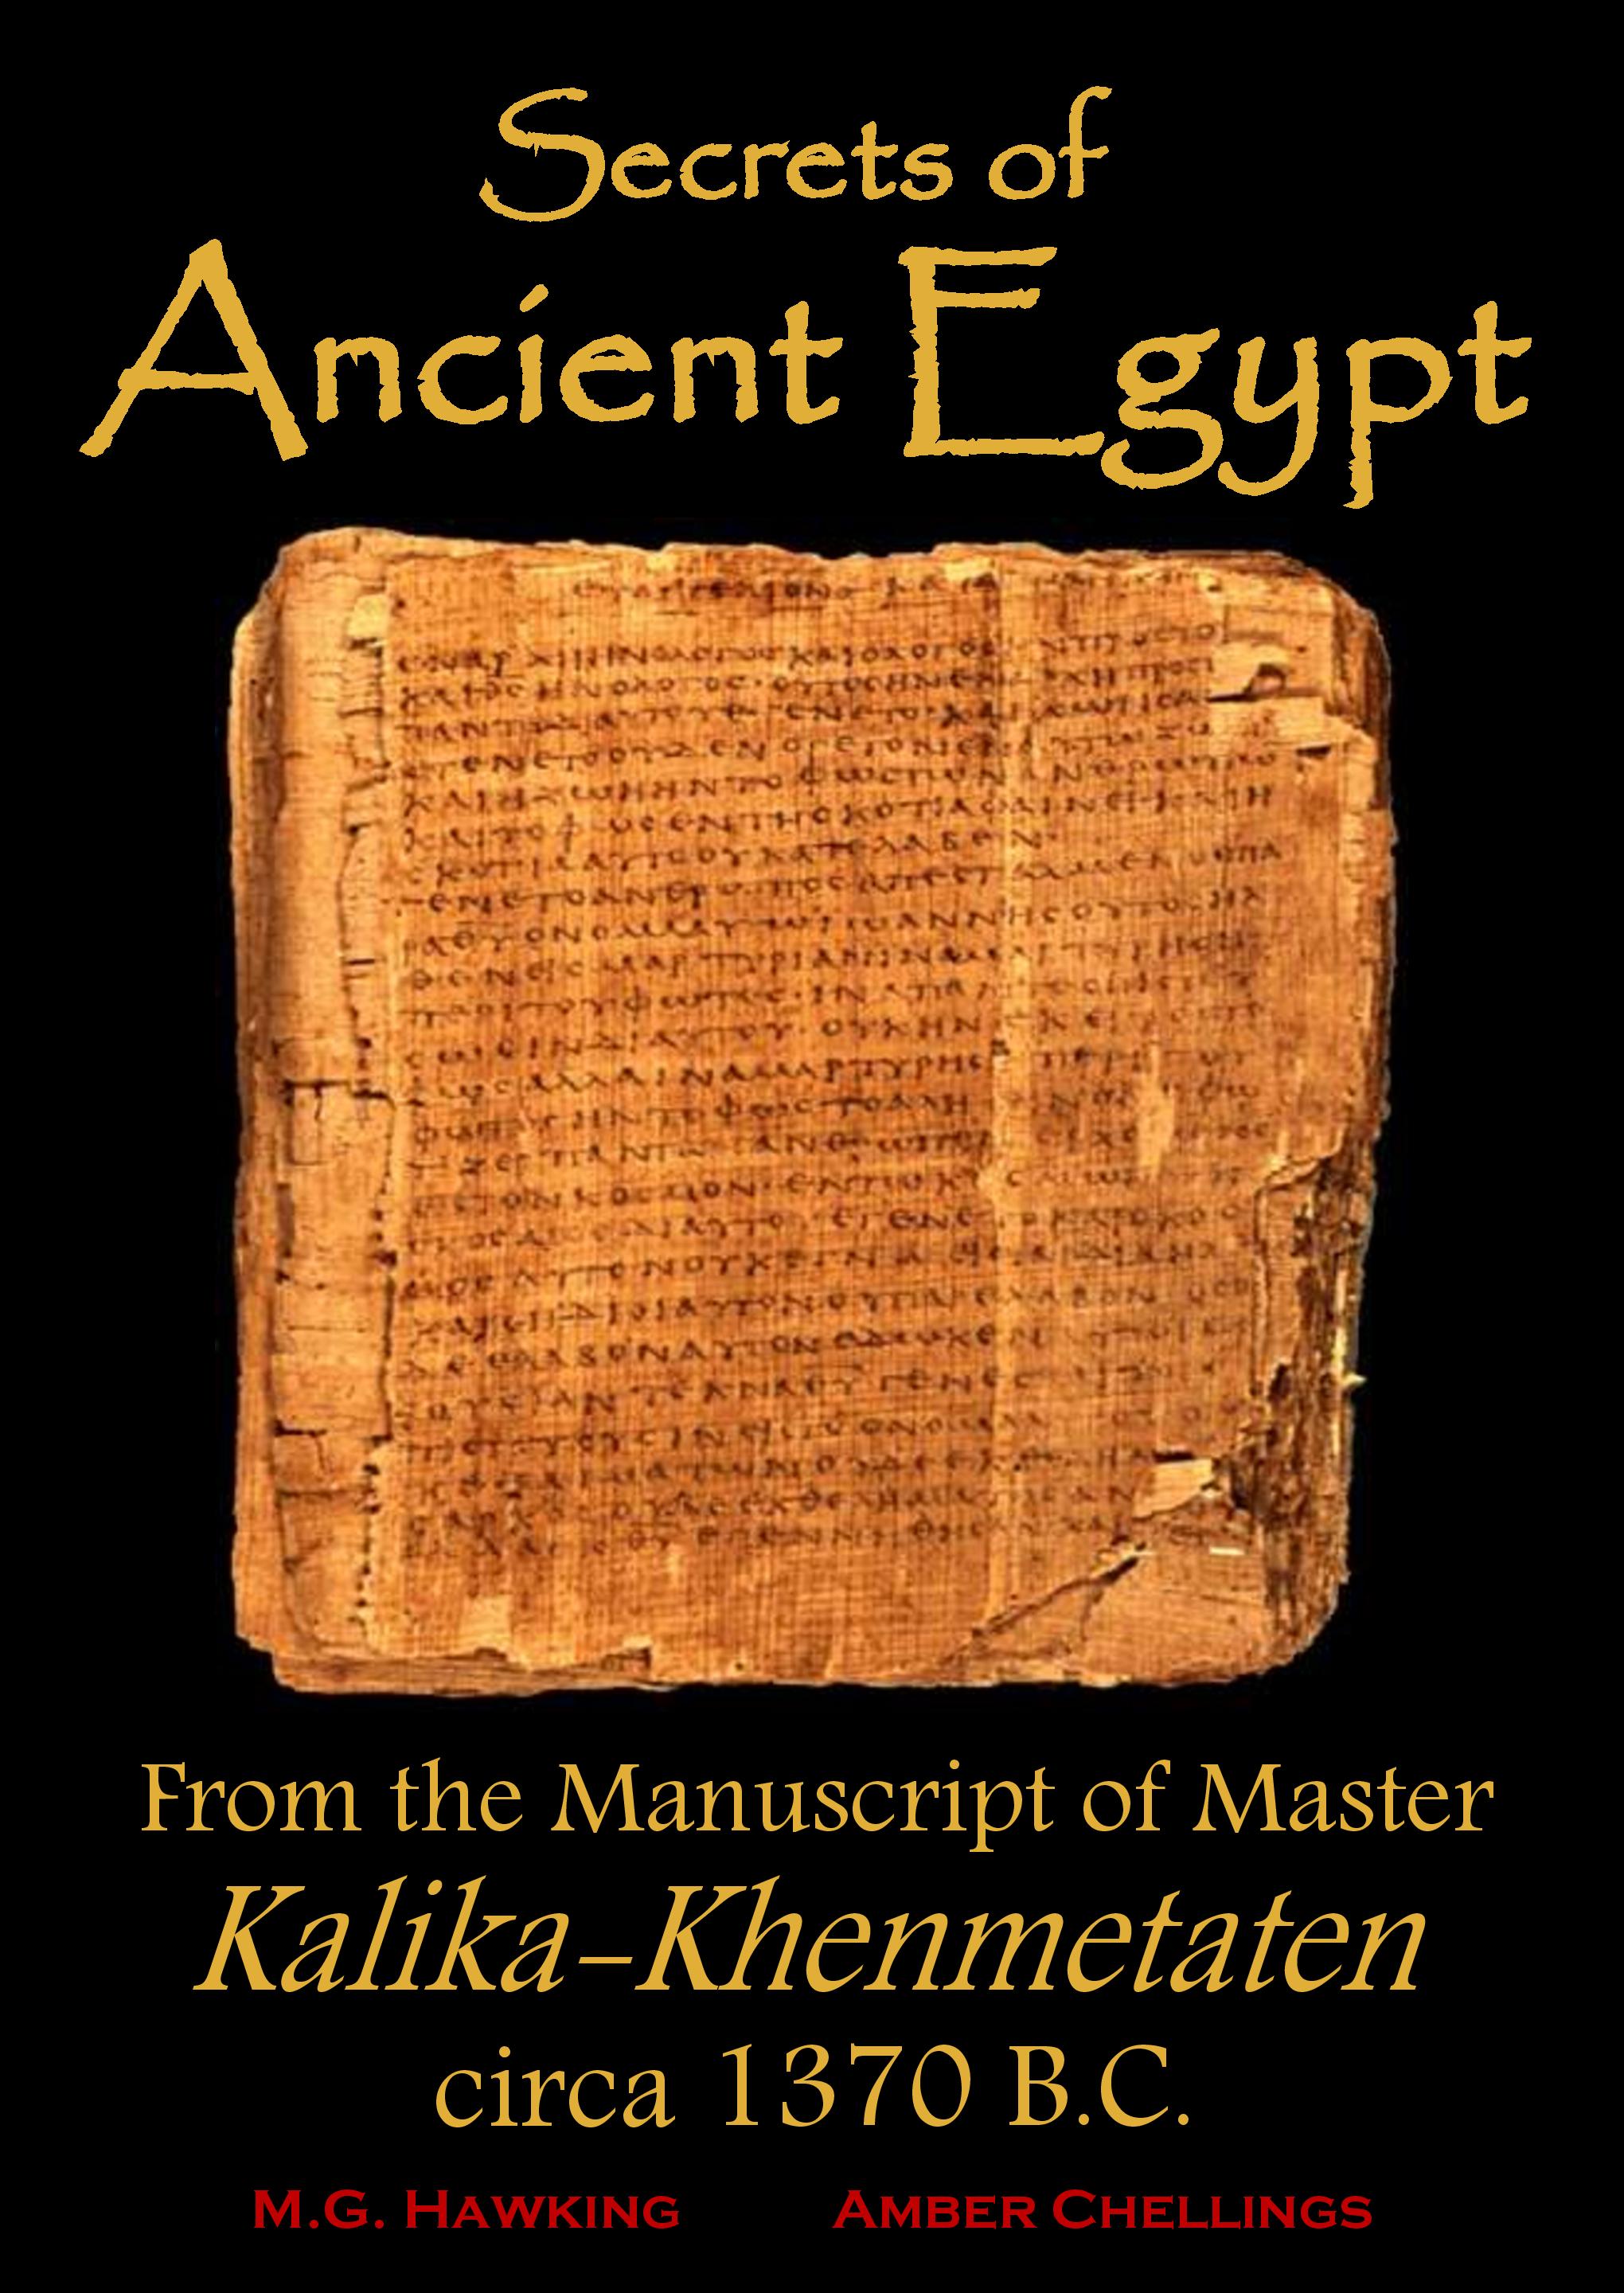 FREE: Ancient Egypt, Secrets from the Manuscript of Master Kalika-Khenmetaten, circa 1370 B.C. by M.G. Hawking, Amber Chellings, Jenna Wolfe